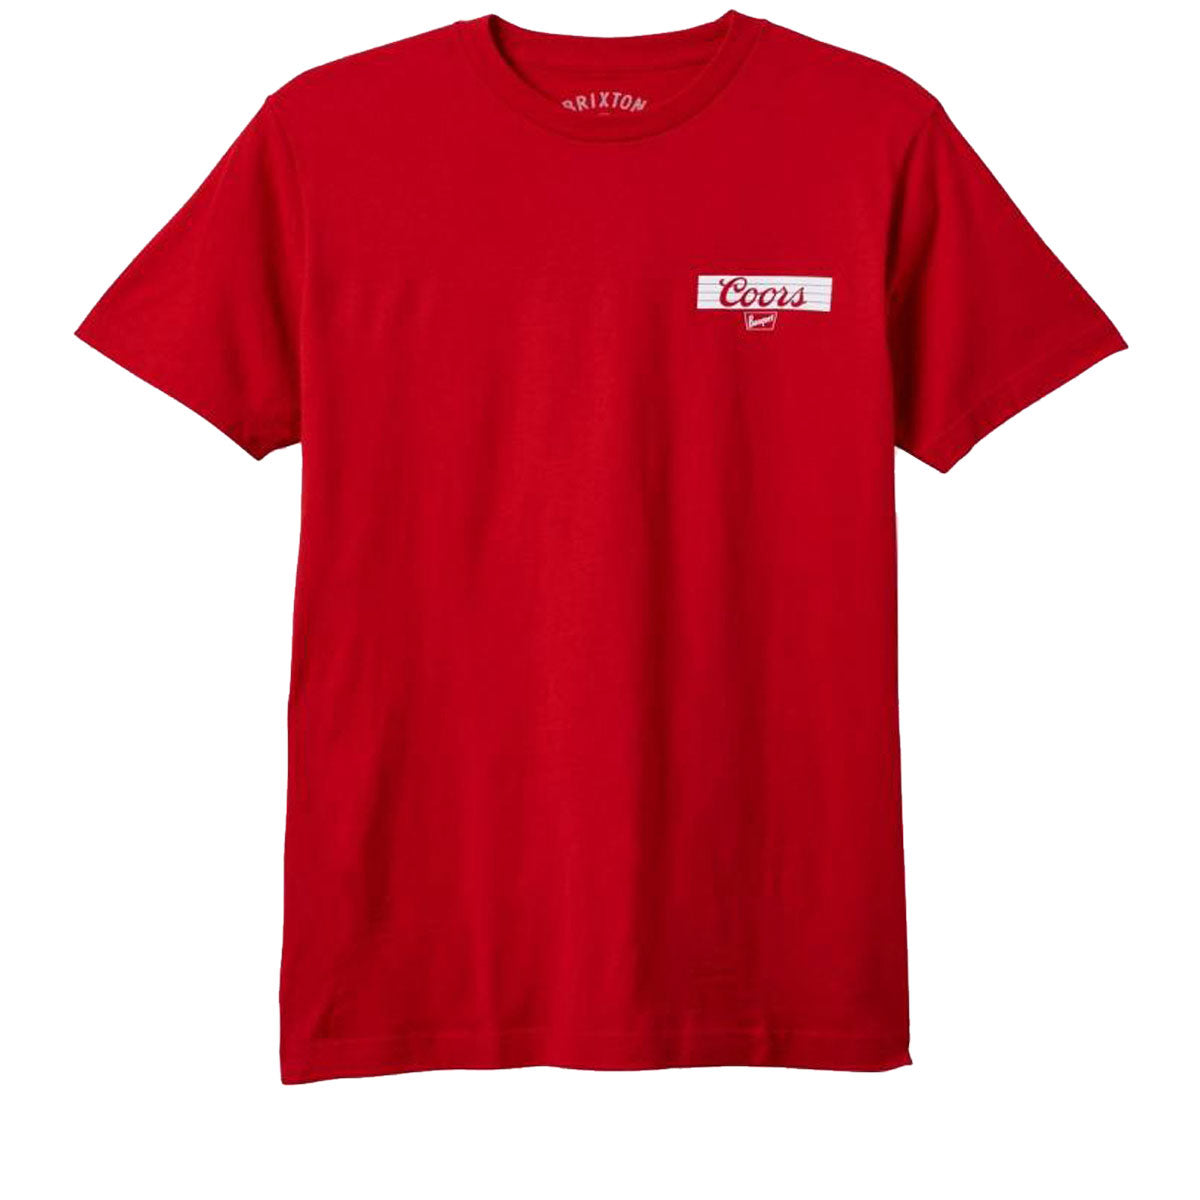 Brixton x Coors Bar T-Shirt - Red image 2